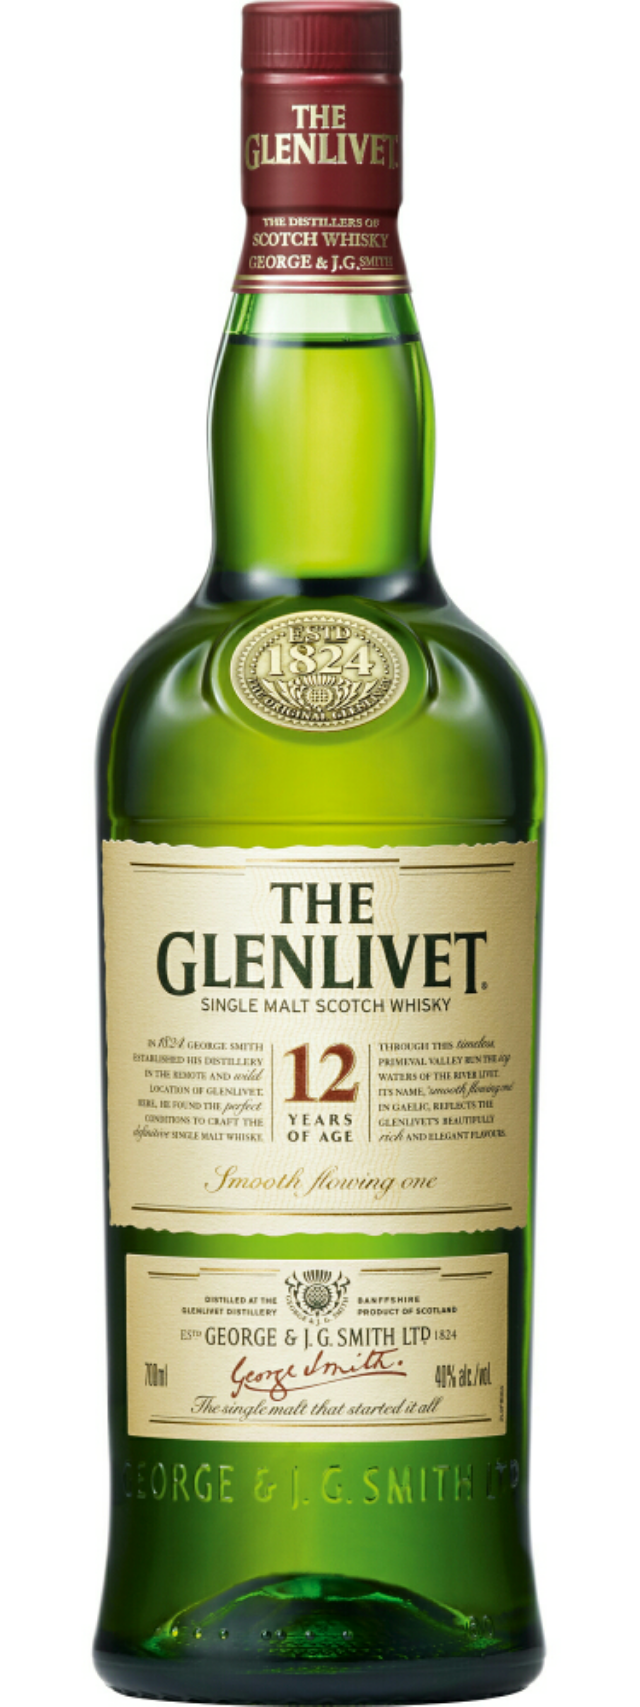 The Glenlivet - The Glenlivet Distillery (50 mL) alcohol collectible [Barcode 005000000029] - Main Image 1